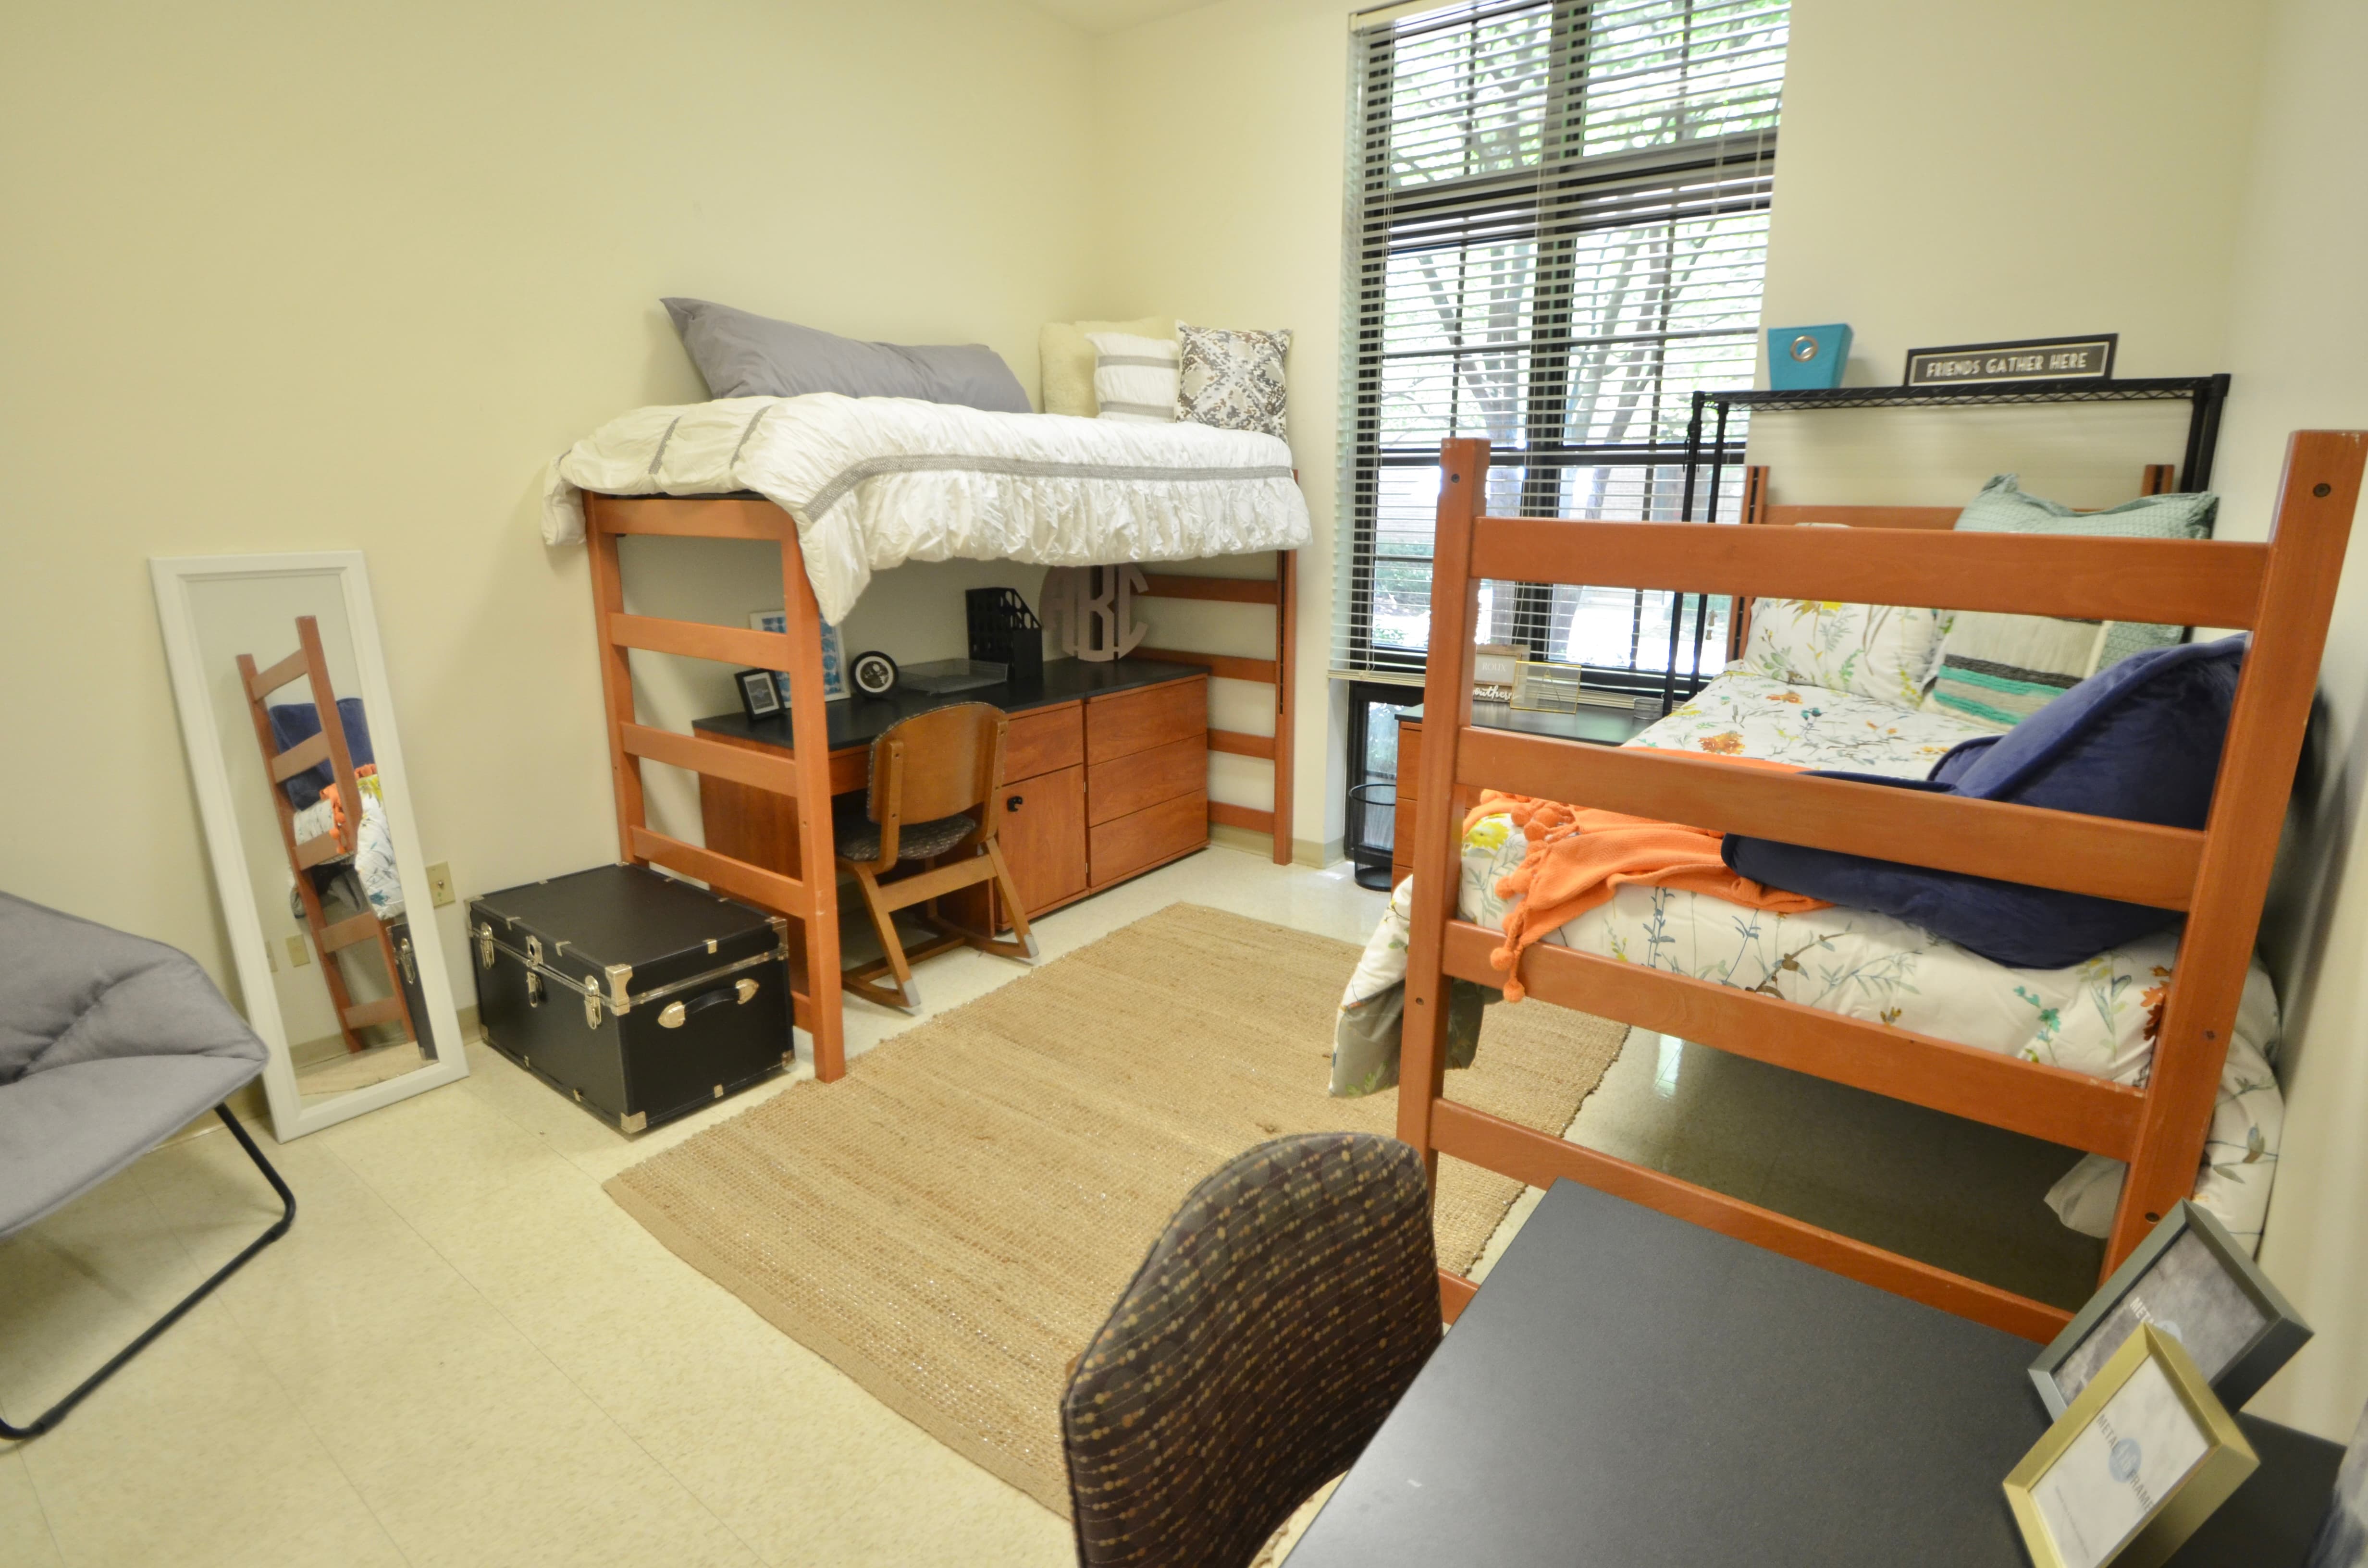 BRC room with bunk beds